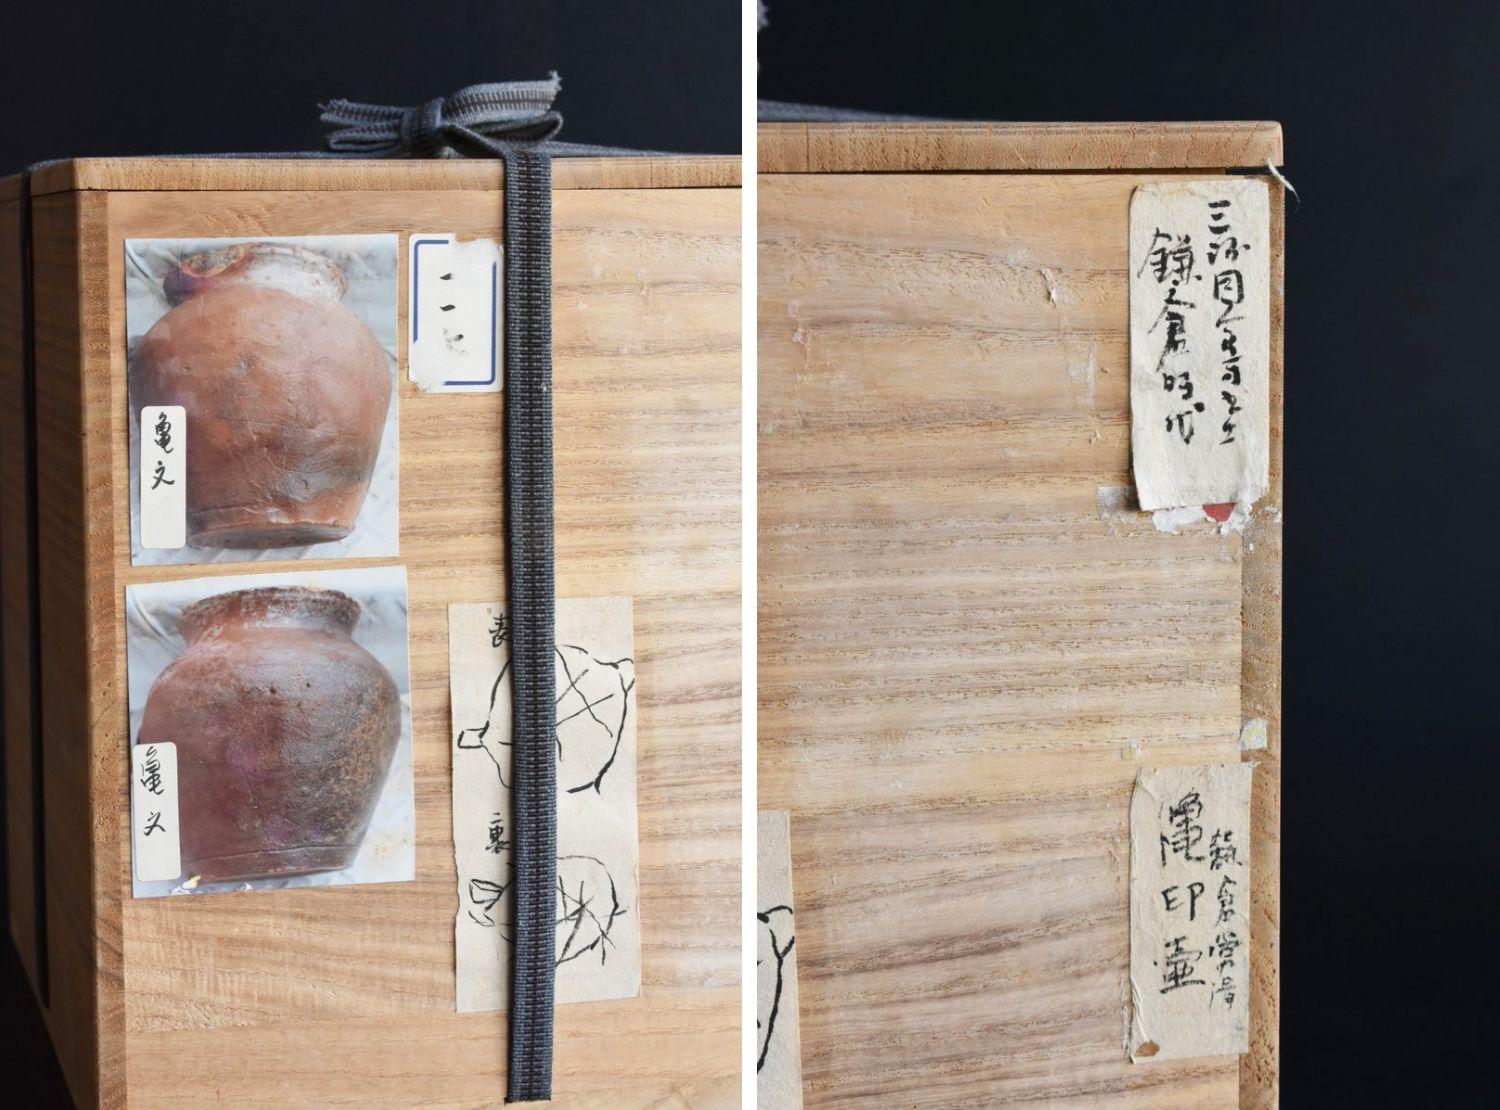 Japanese Antique jar / Tokoname Ware / 1400s-1500s / Muromachi Period/Vase 13